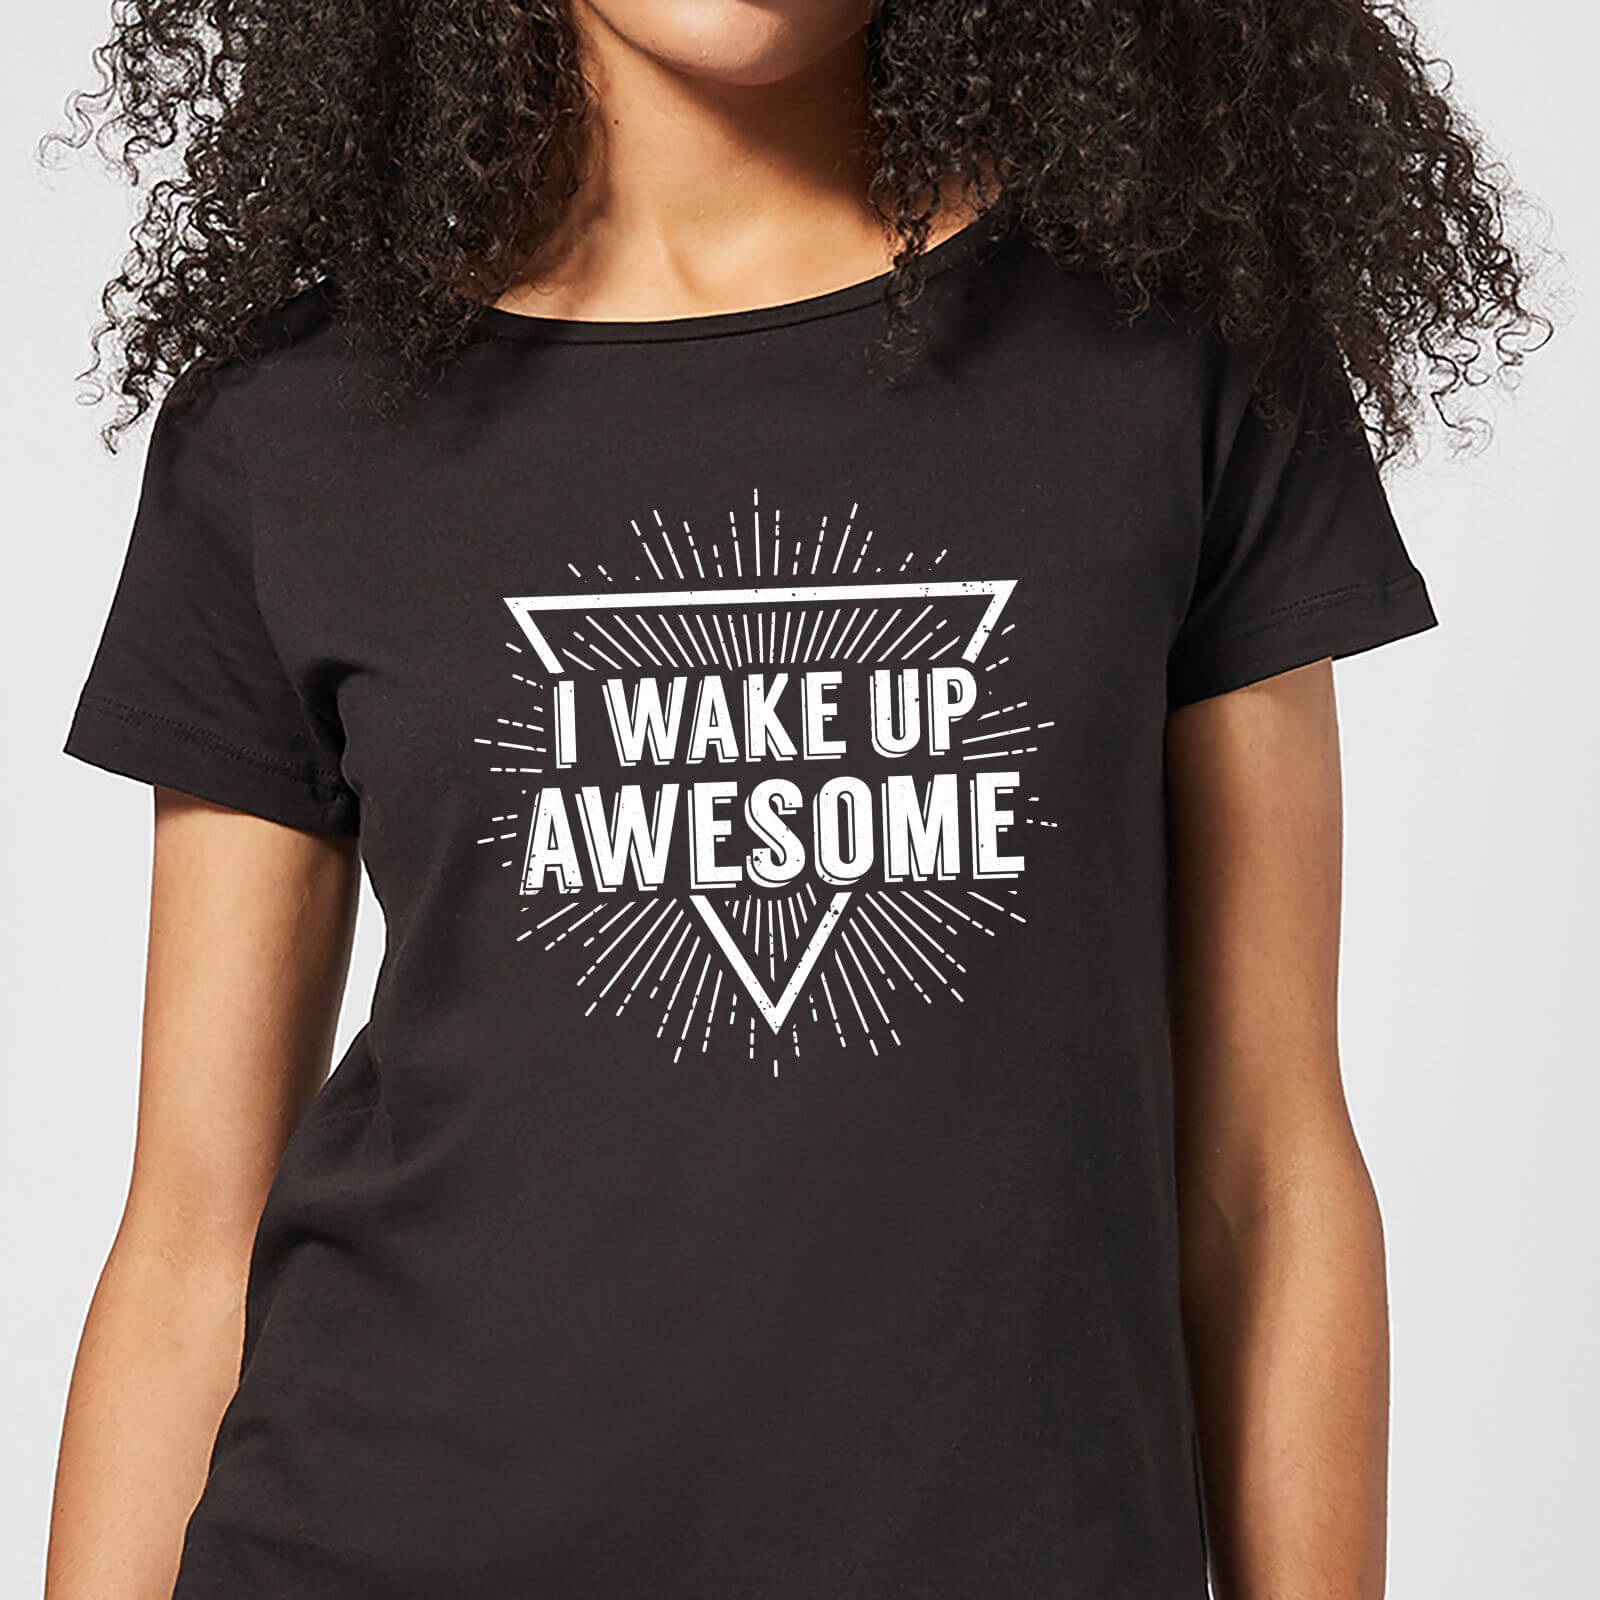 I Wake up Awesome Women's T-Shirt - Black - 3XL - Black